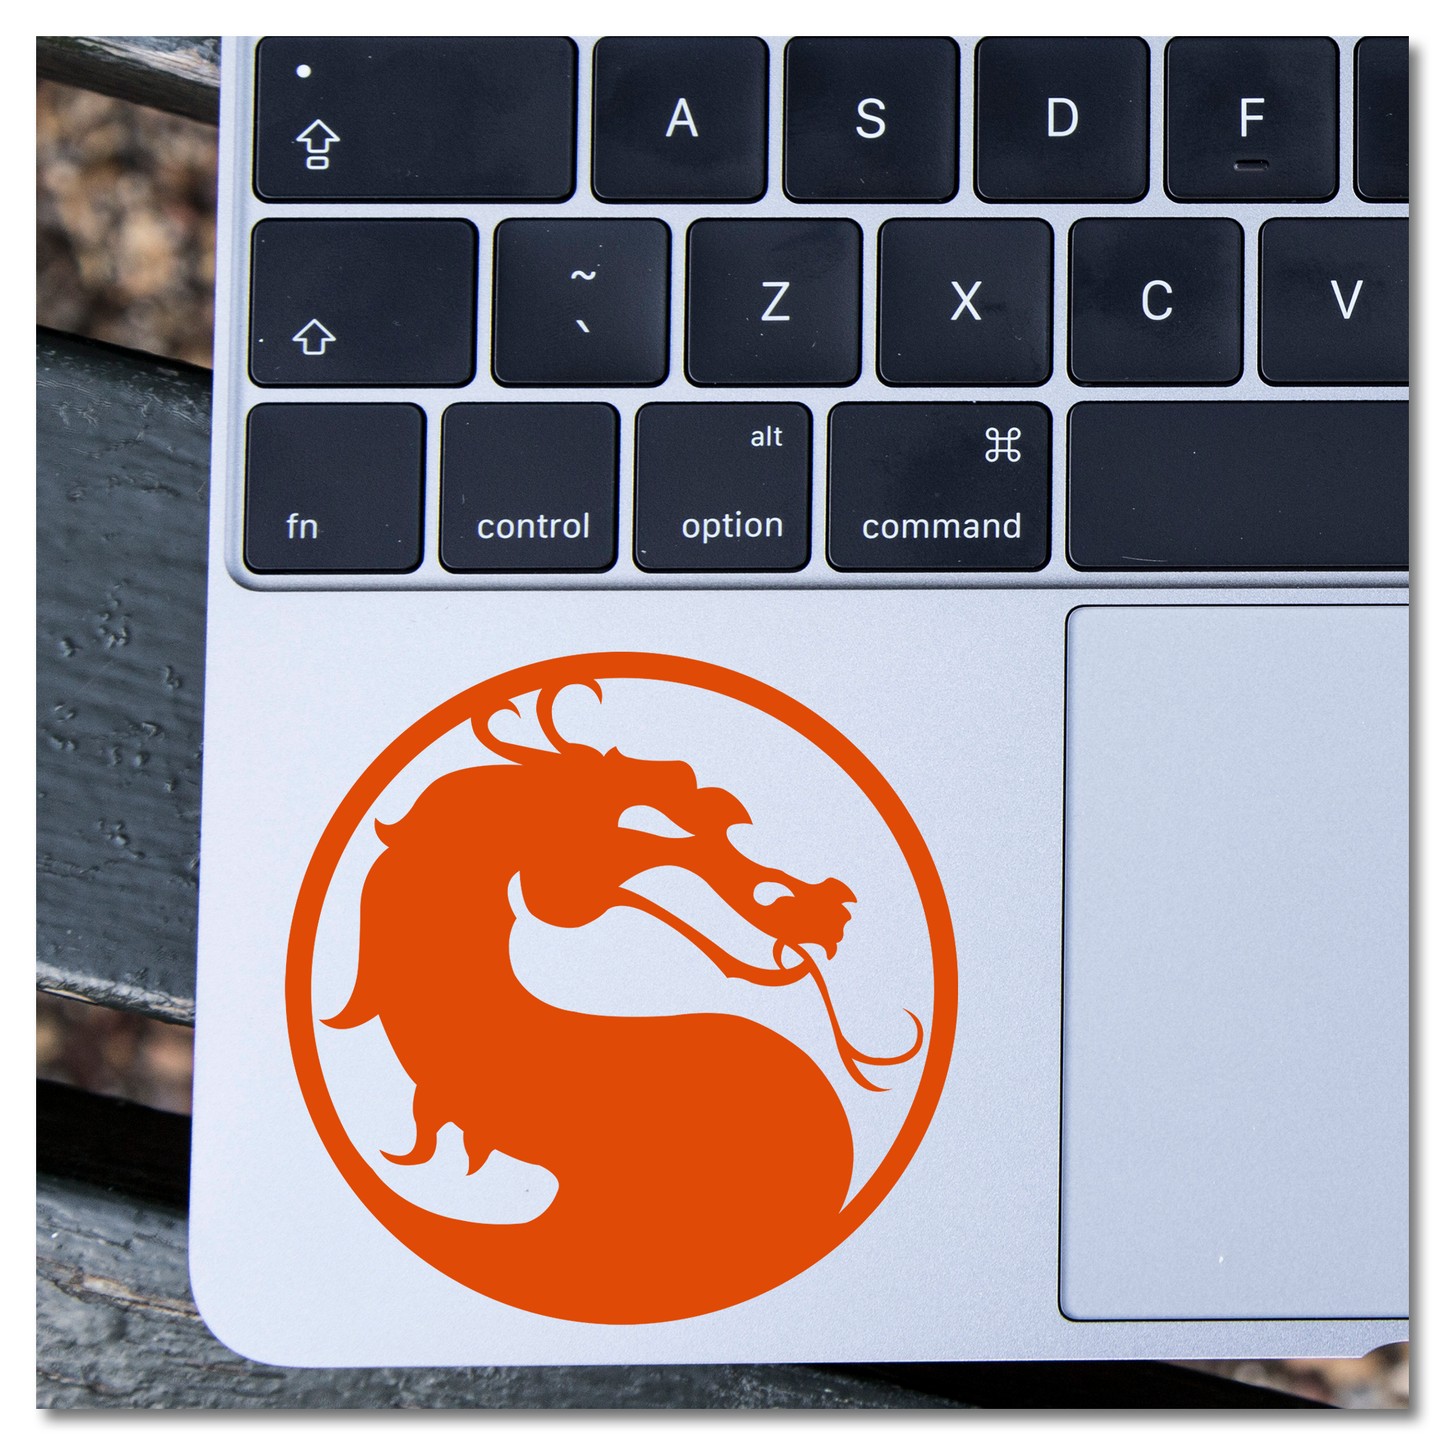 Mortal Kombat Dragon Logo Vinyl Decal Sticker